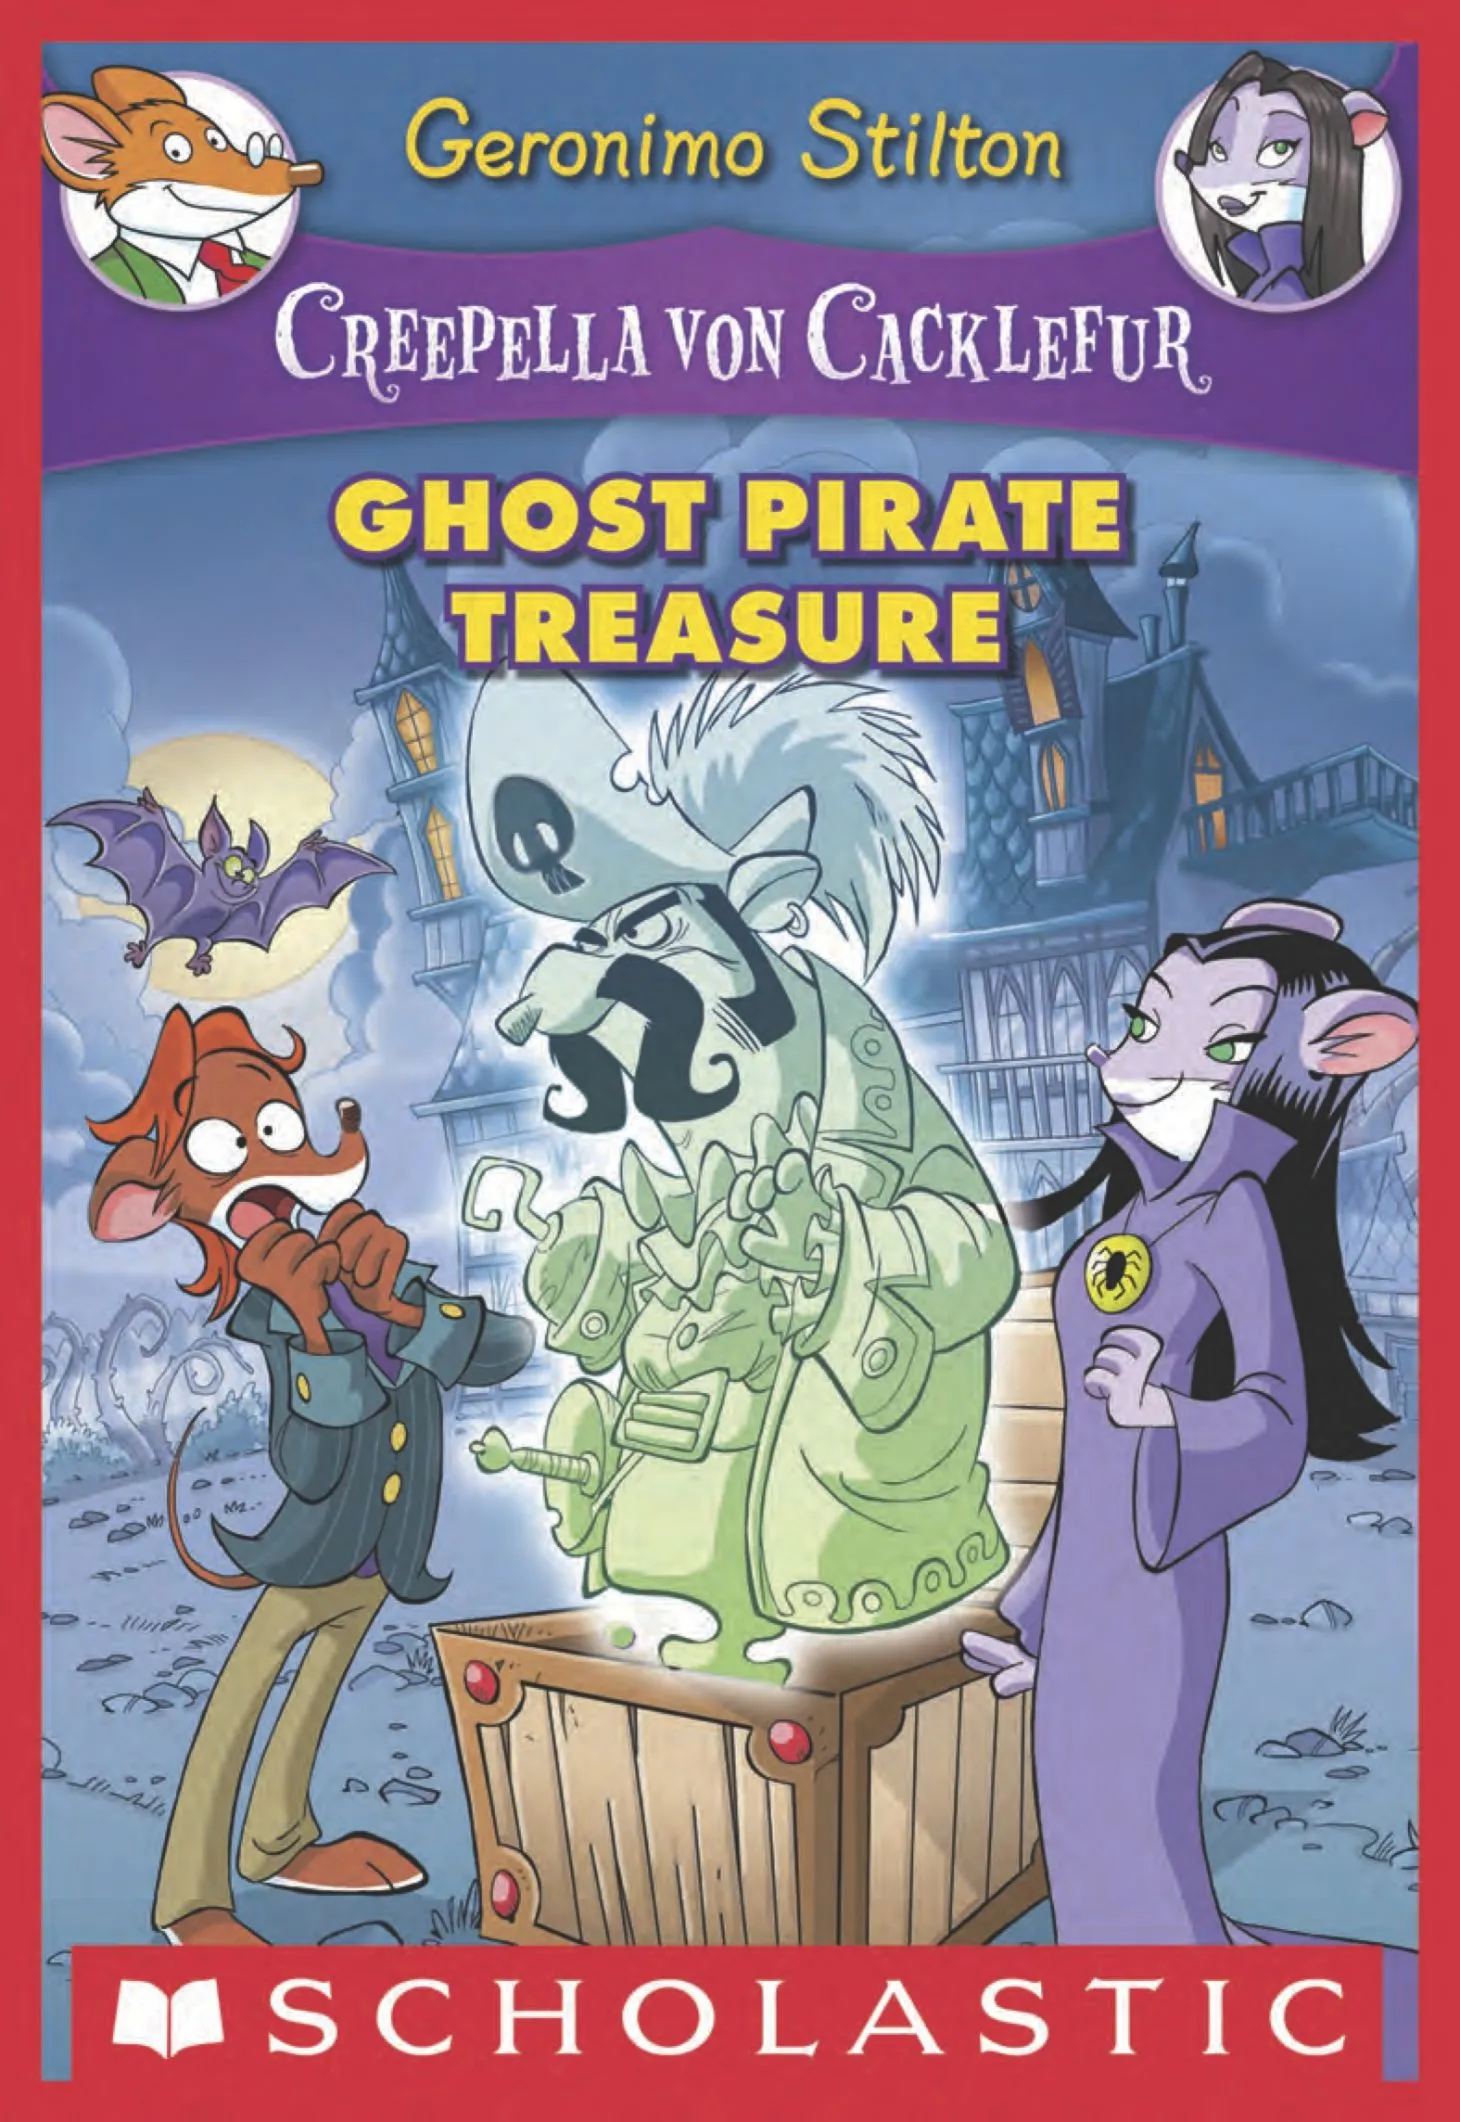 Ghost Pirate Treasure (Creepella von Cacklefur #3)